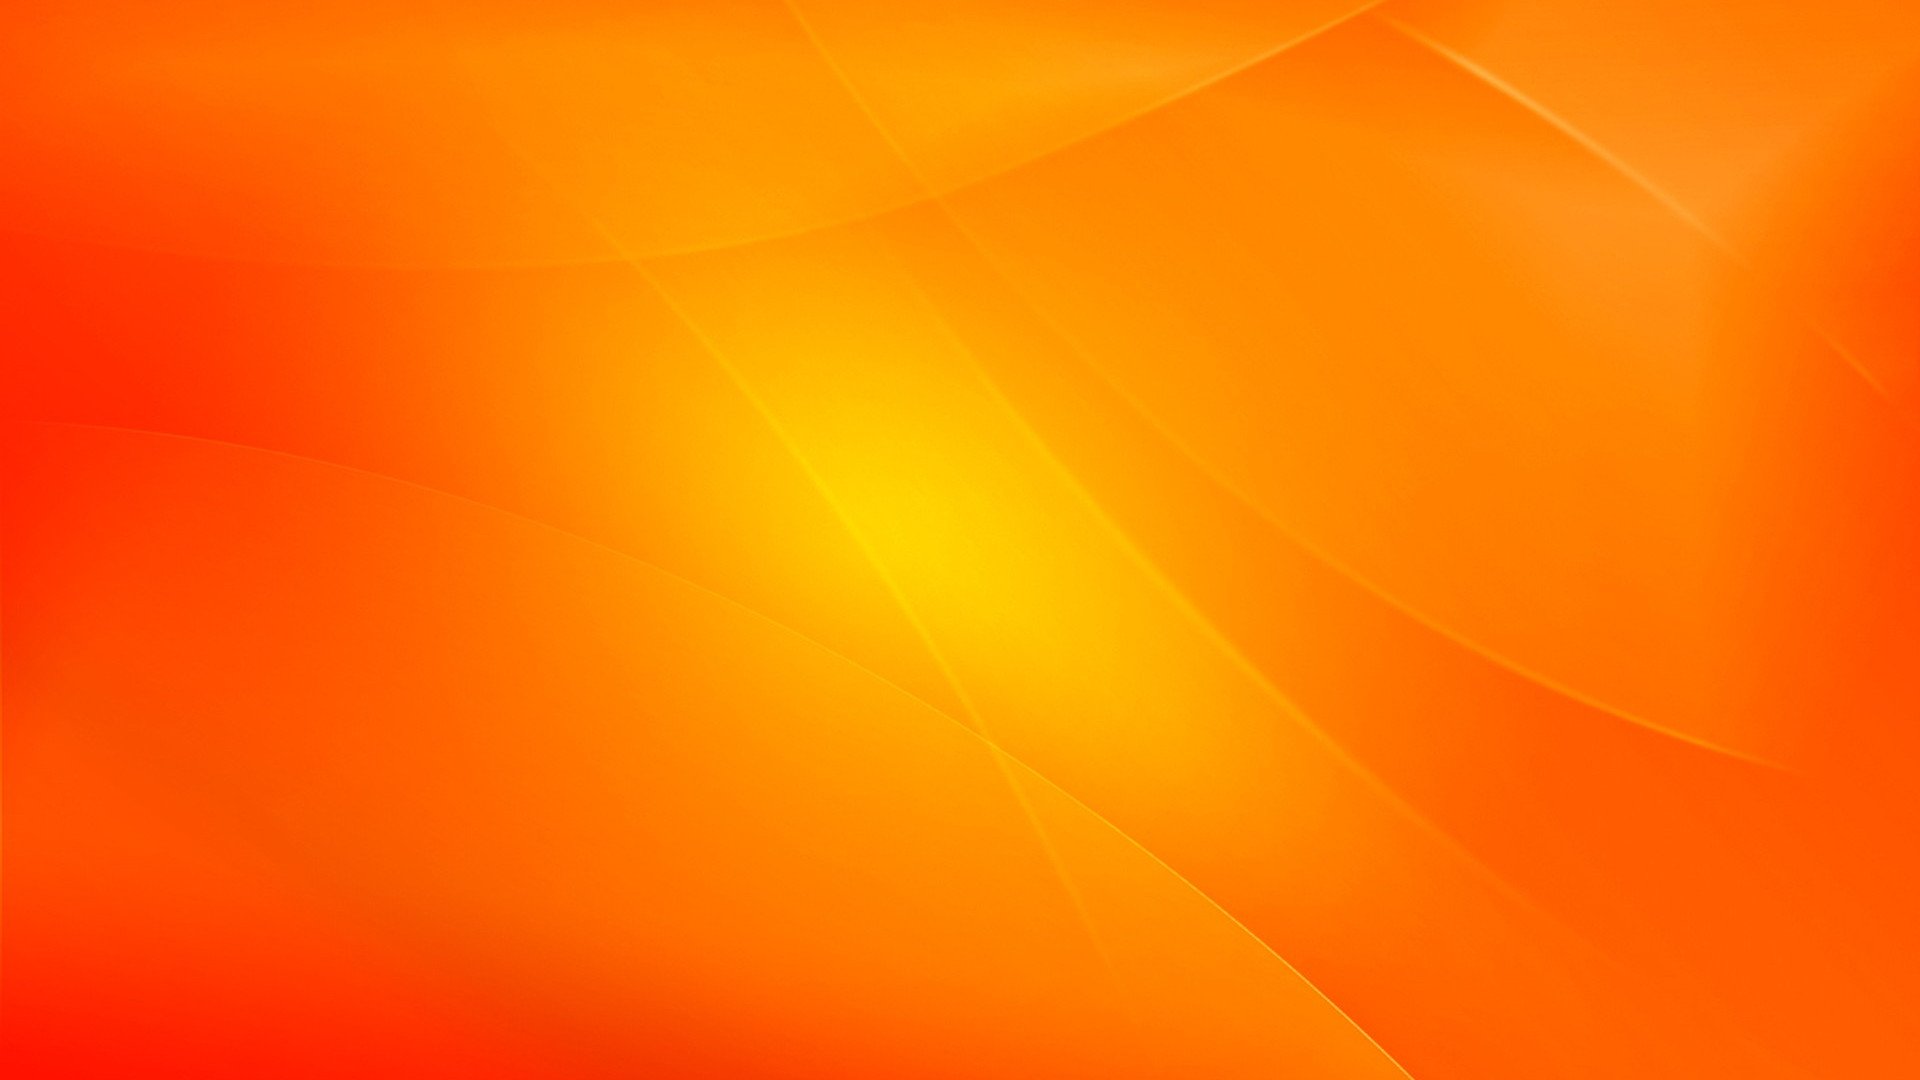 Orange Background Hd Wallpapers Most Popular Orange Background Hd Backgrounds Browsecat Net